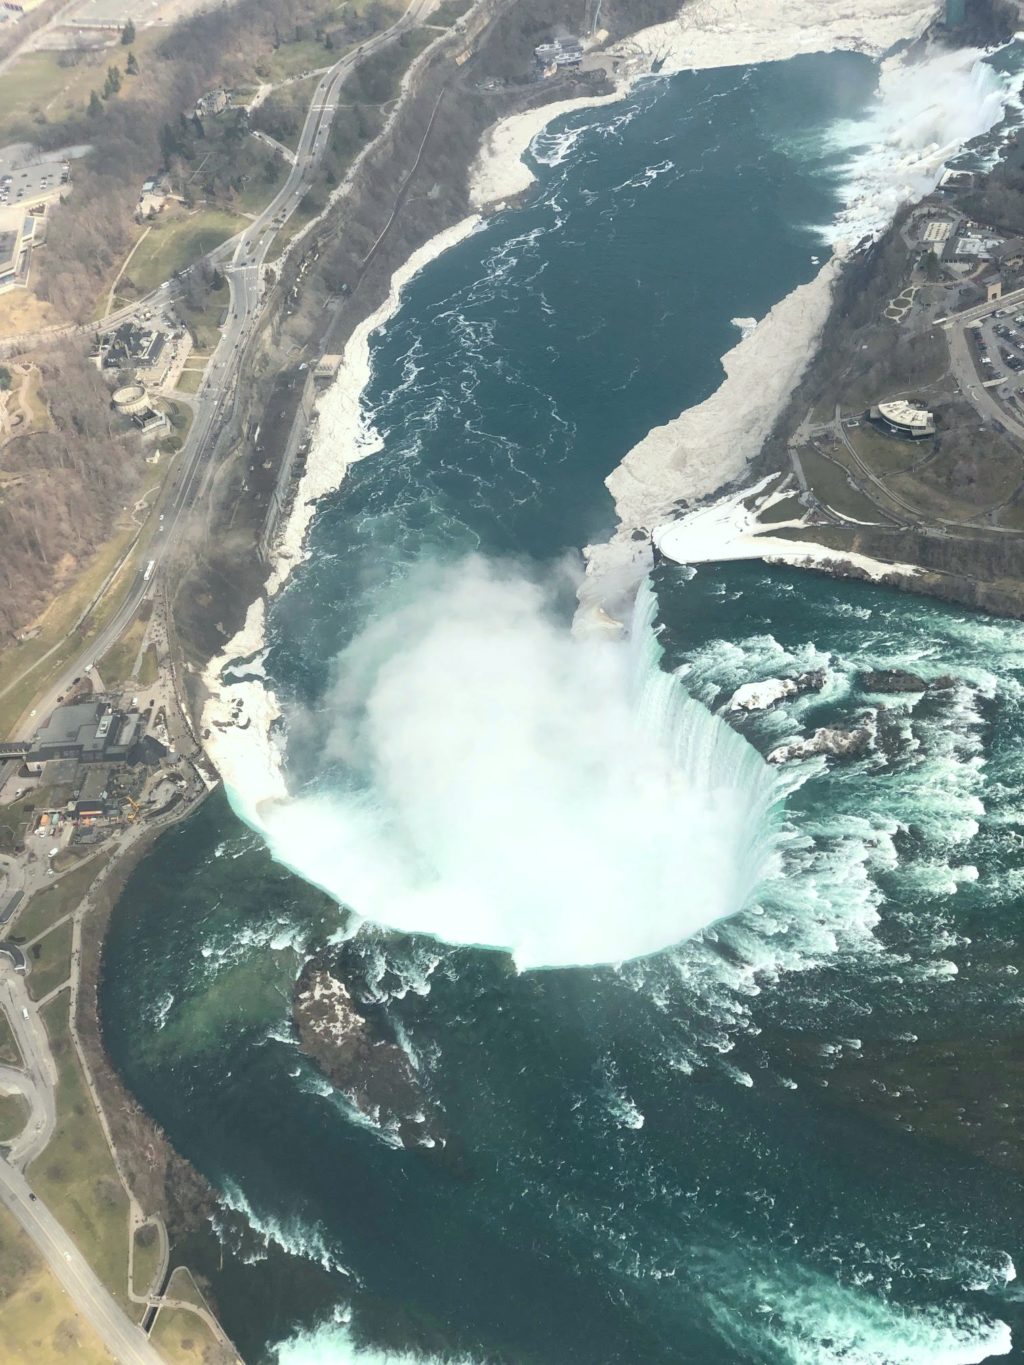 Horse Shoe falls in Niagara Falls, ON via helicopter.